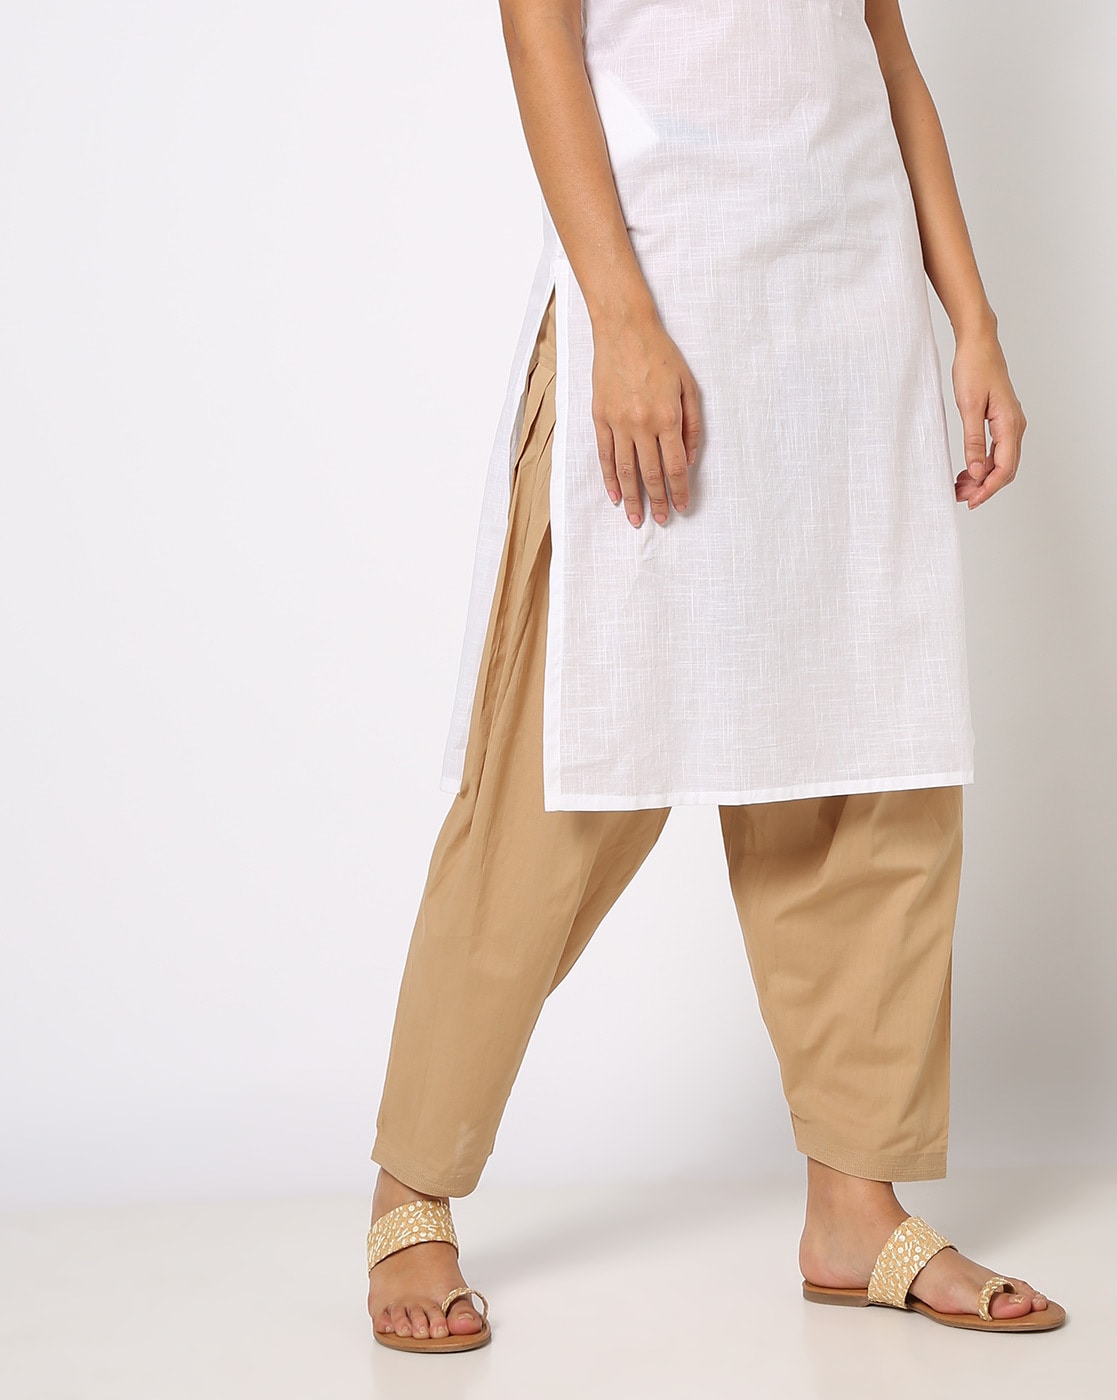 Folkwear Jewels of India Kurta Shirt Kamiz Tunic Churidar Pants Gandhi Hat  #135 Sewing Pattern (Pattern Only) - Walmart.com